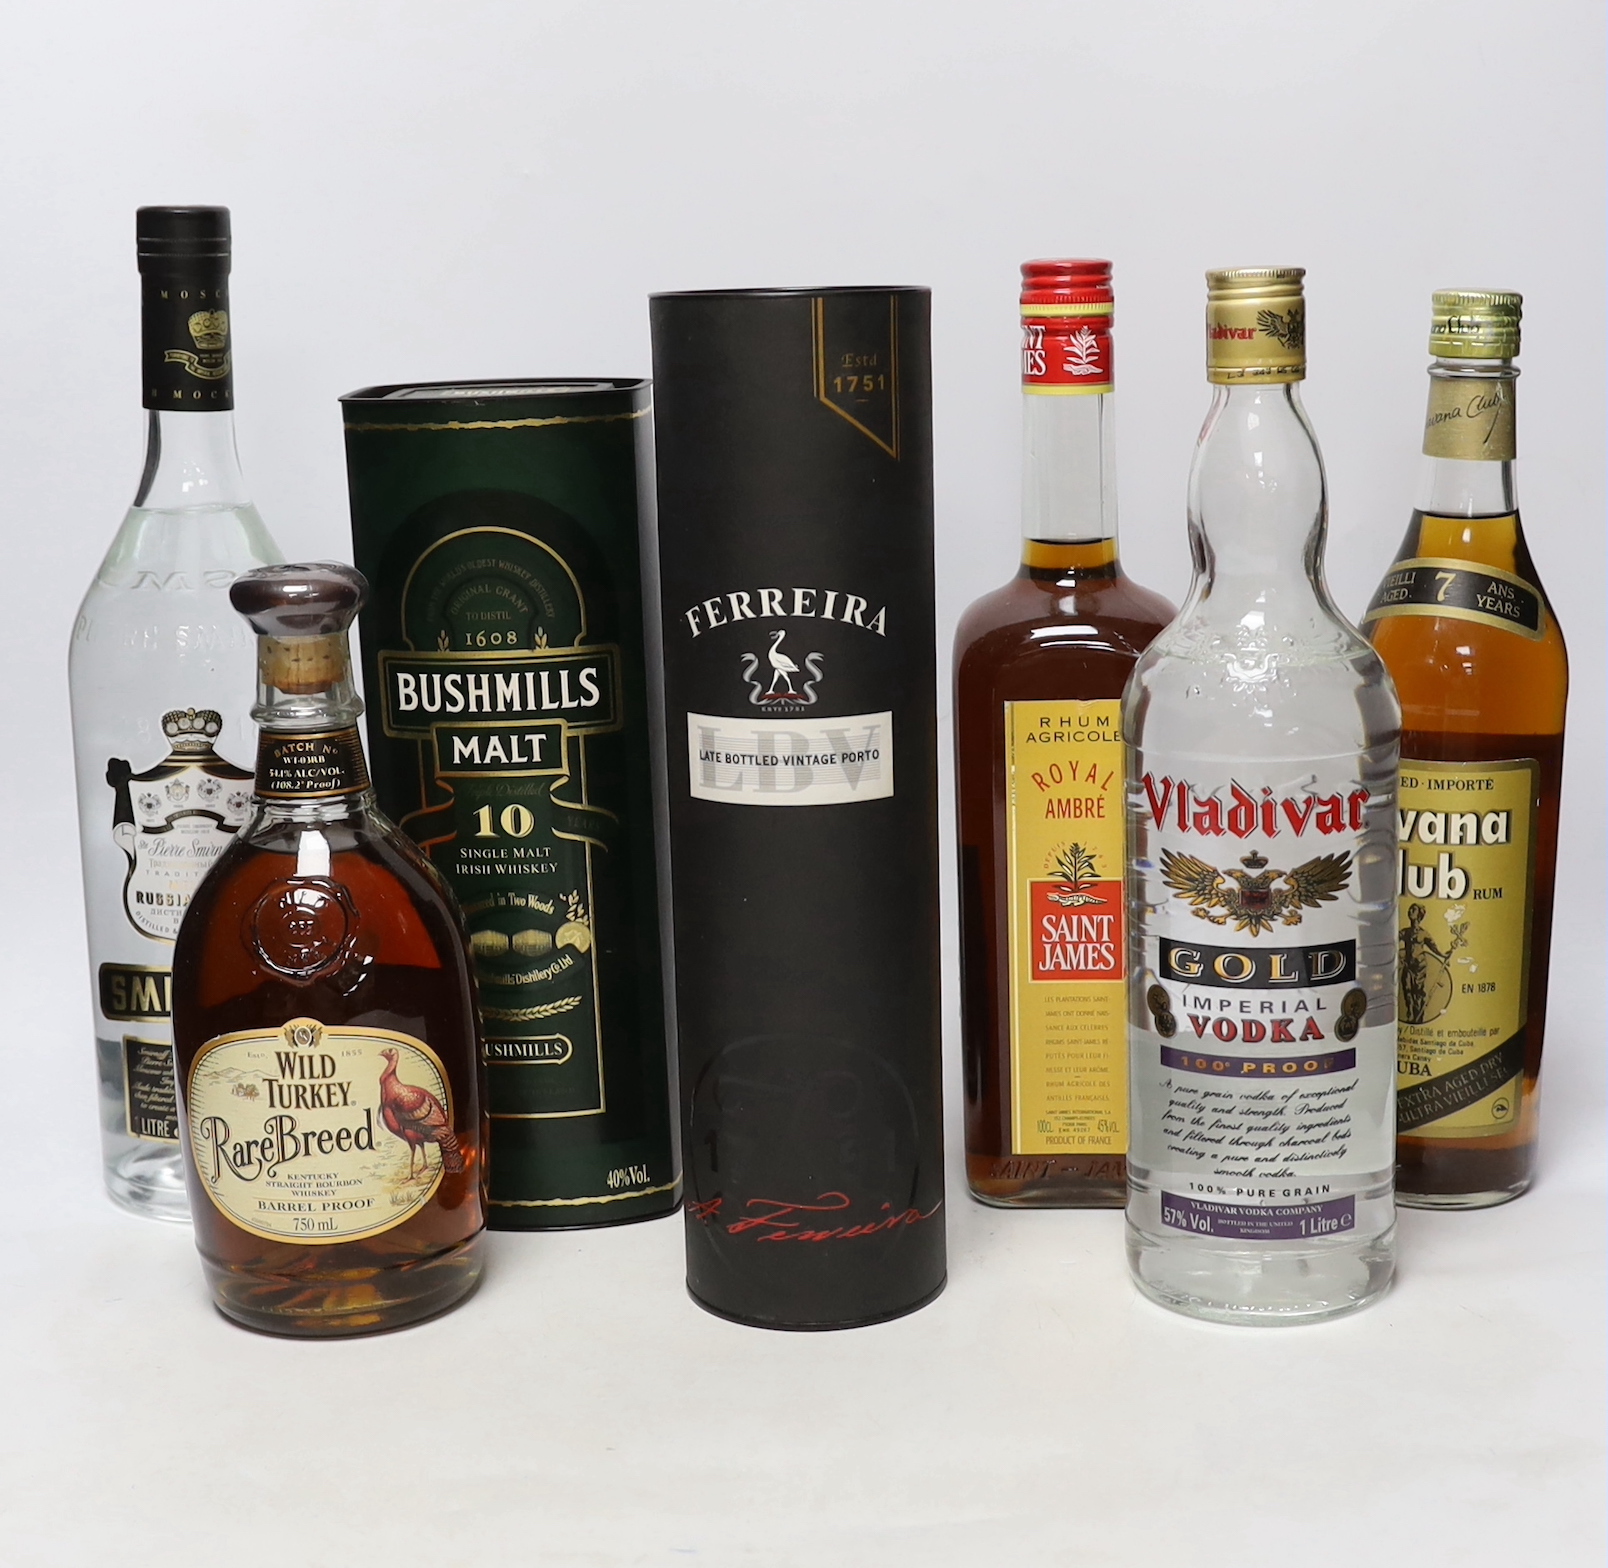 Ten bottles of assorted spirits including vodka and Rum